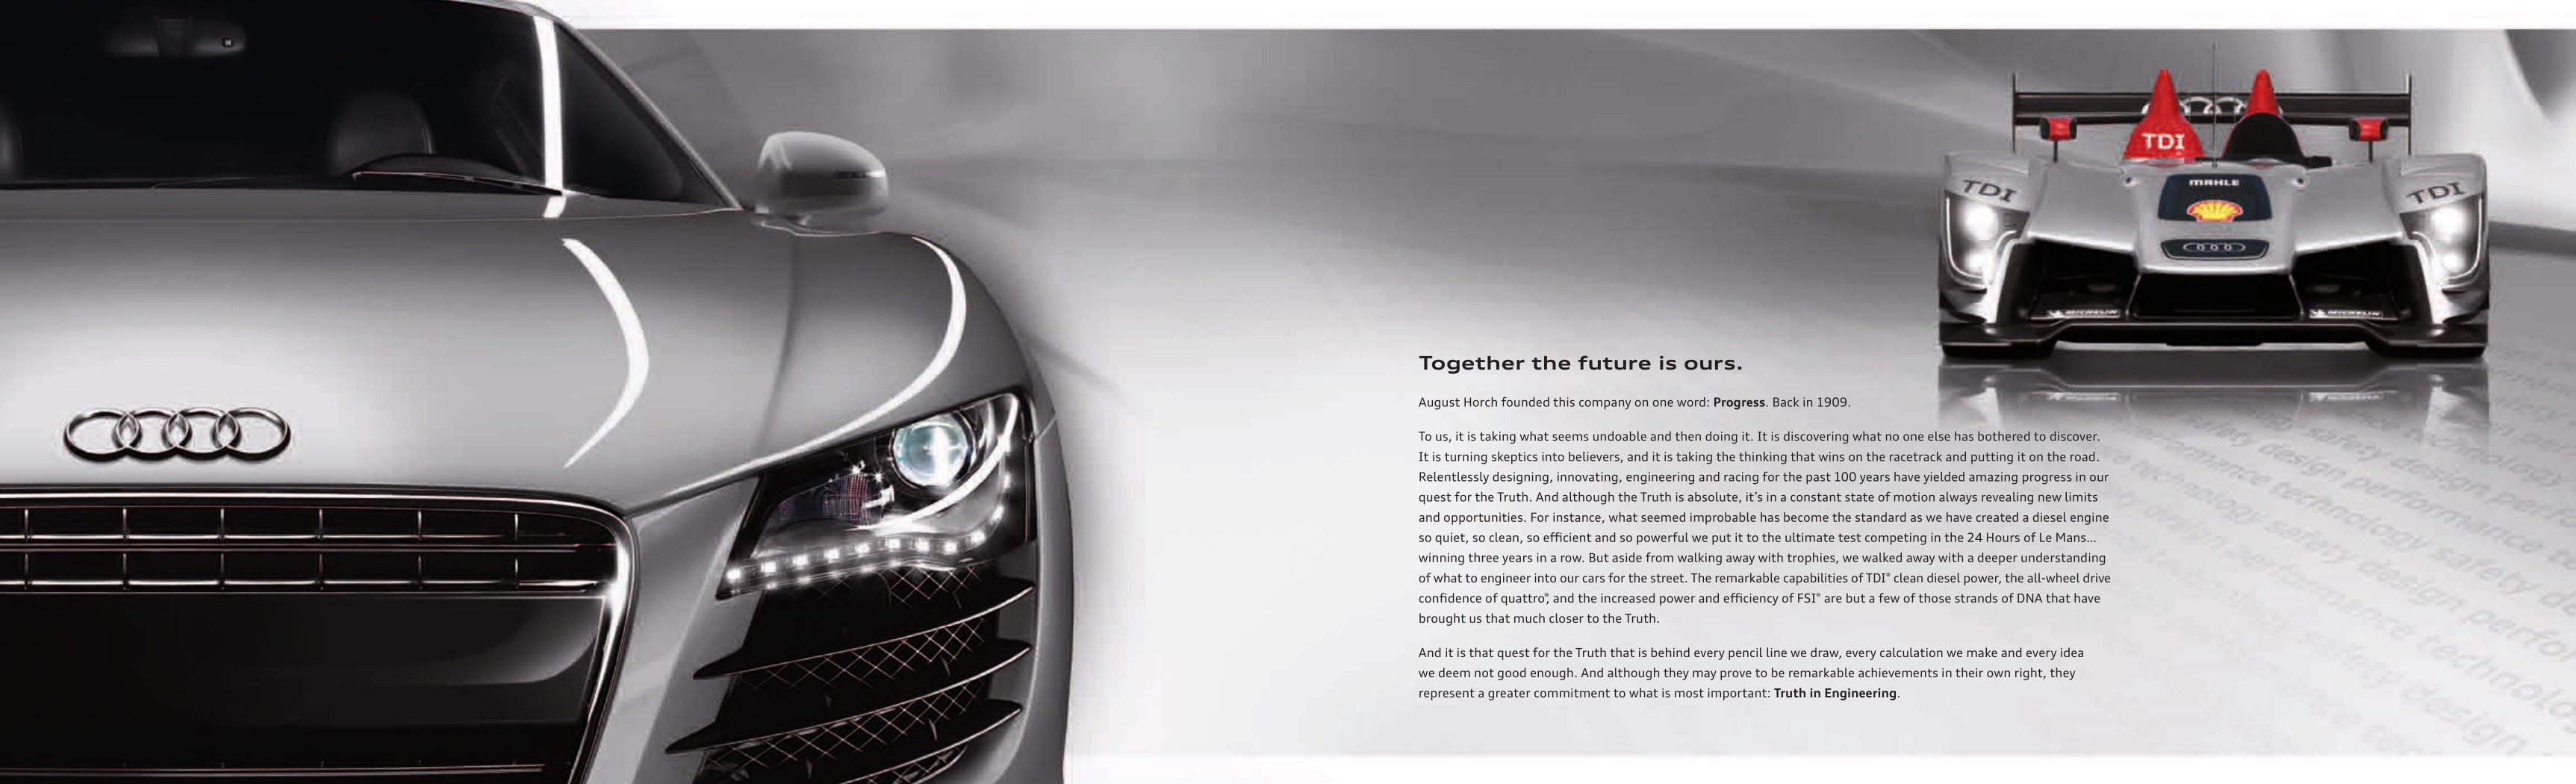 2010 Audi Brochure Page 1